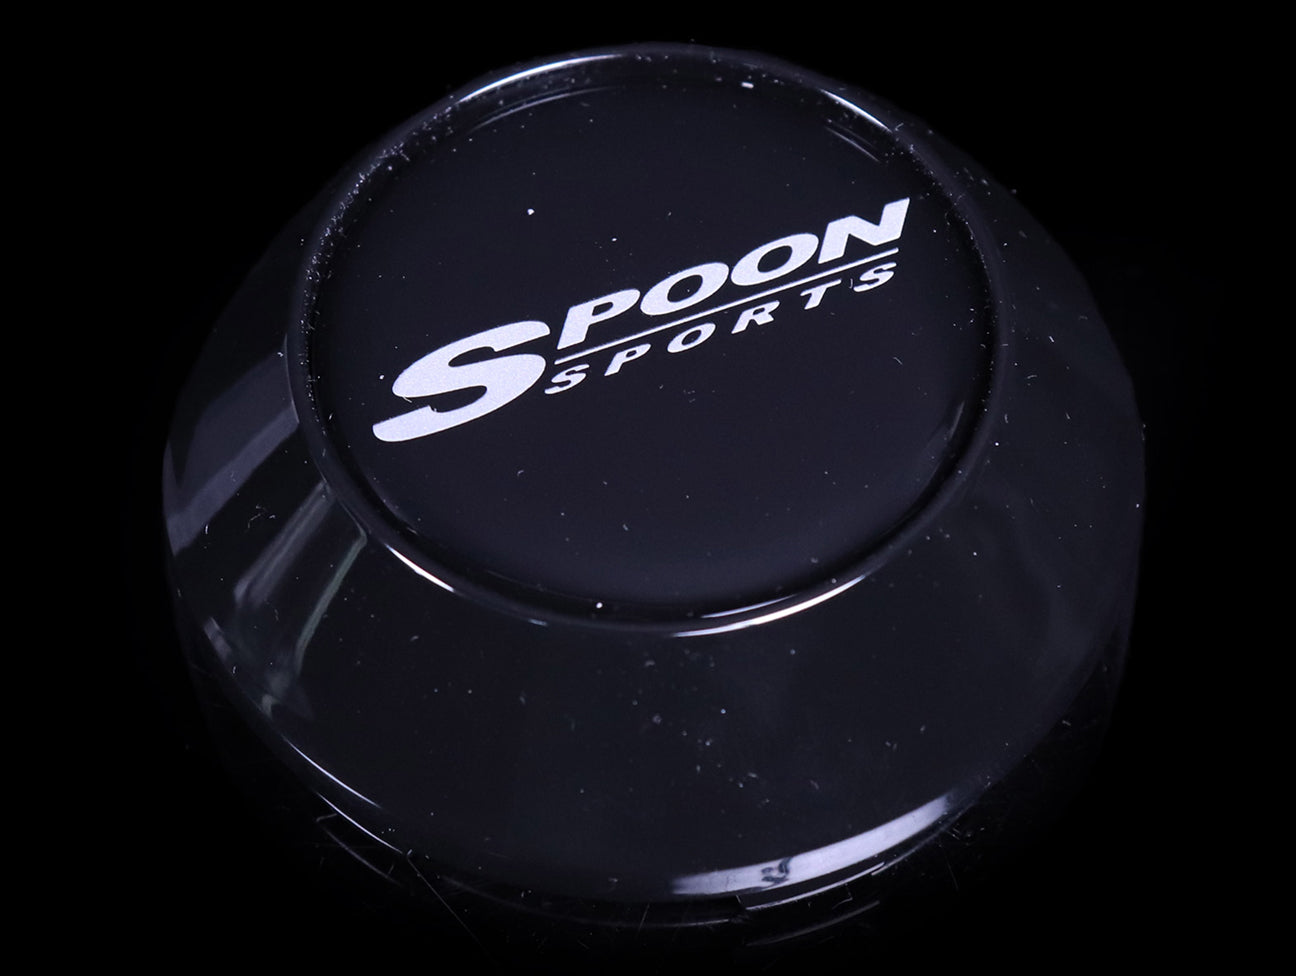 Spoon Sports SW388 Black Center Cap